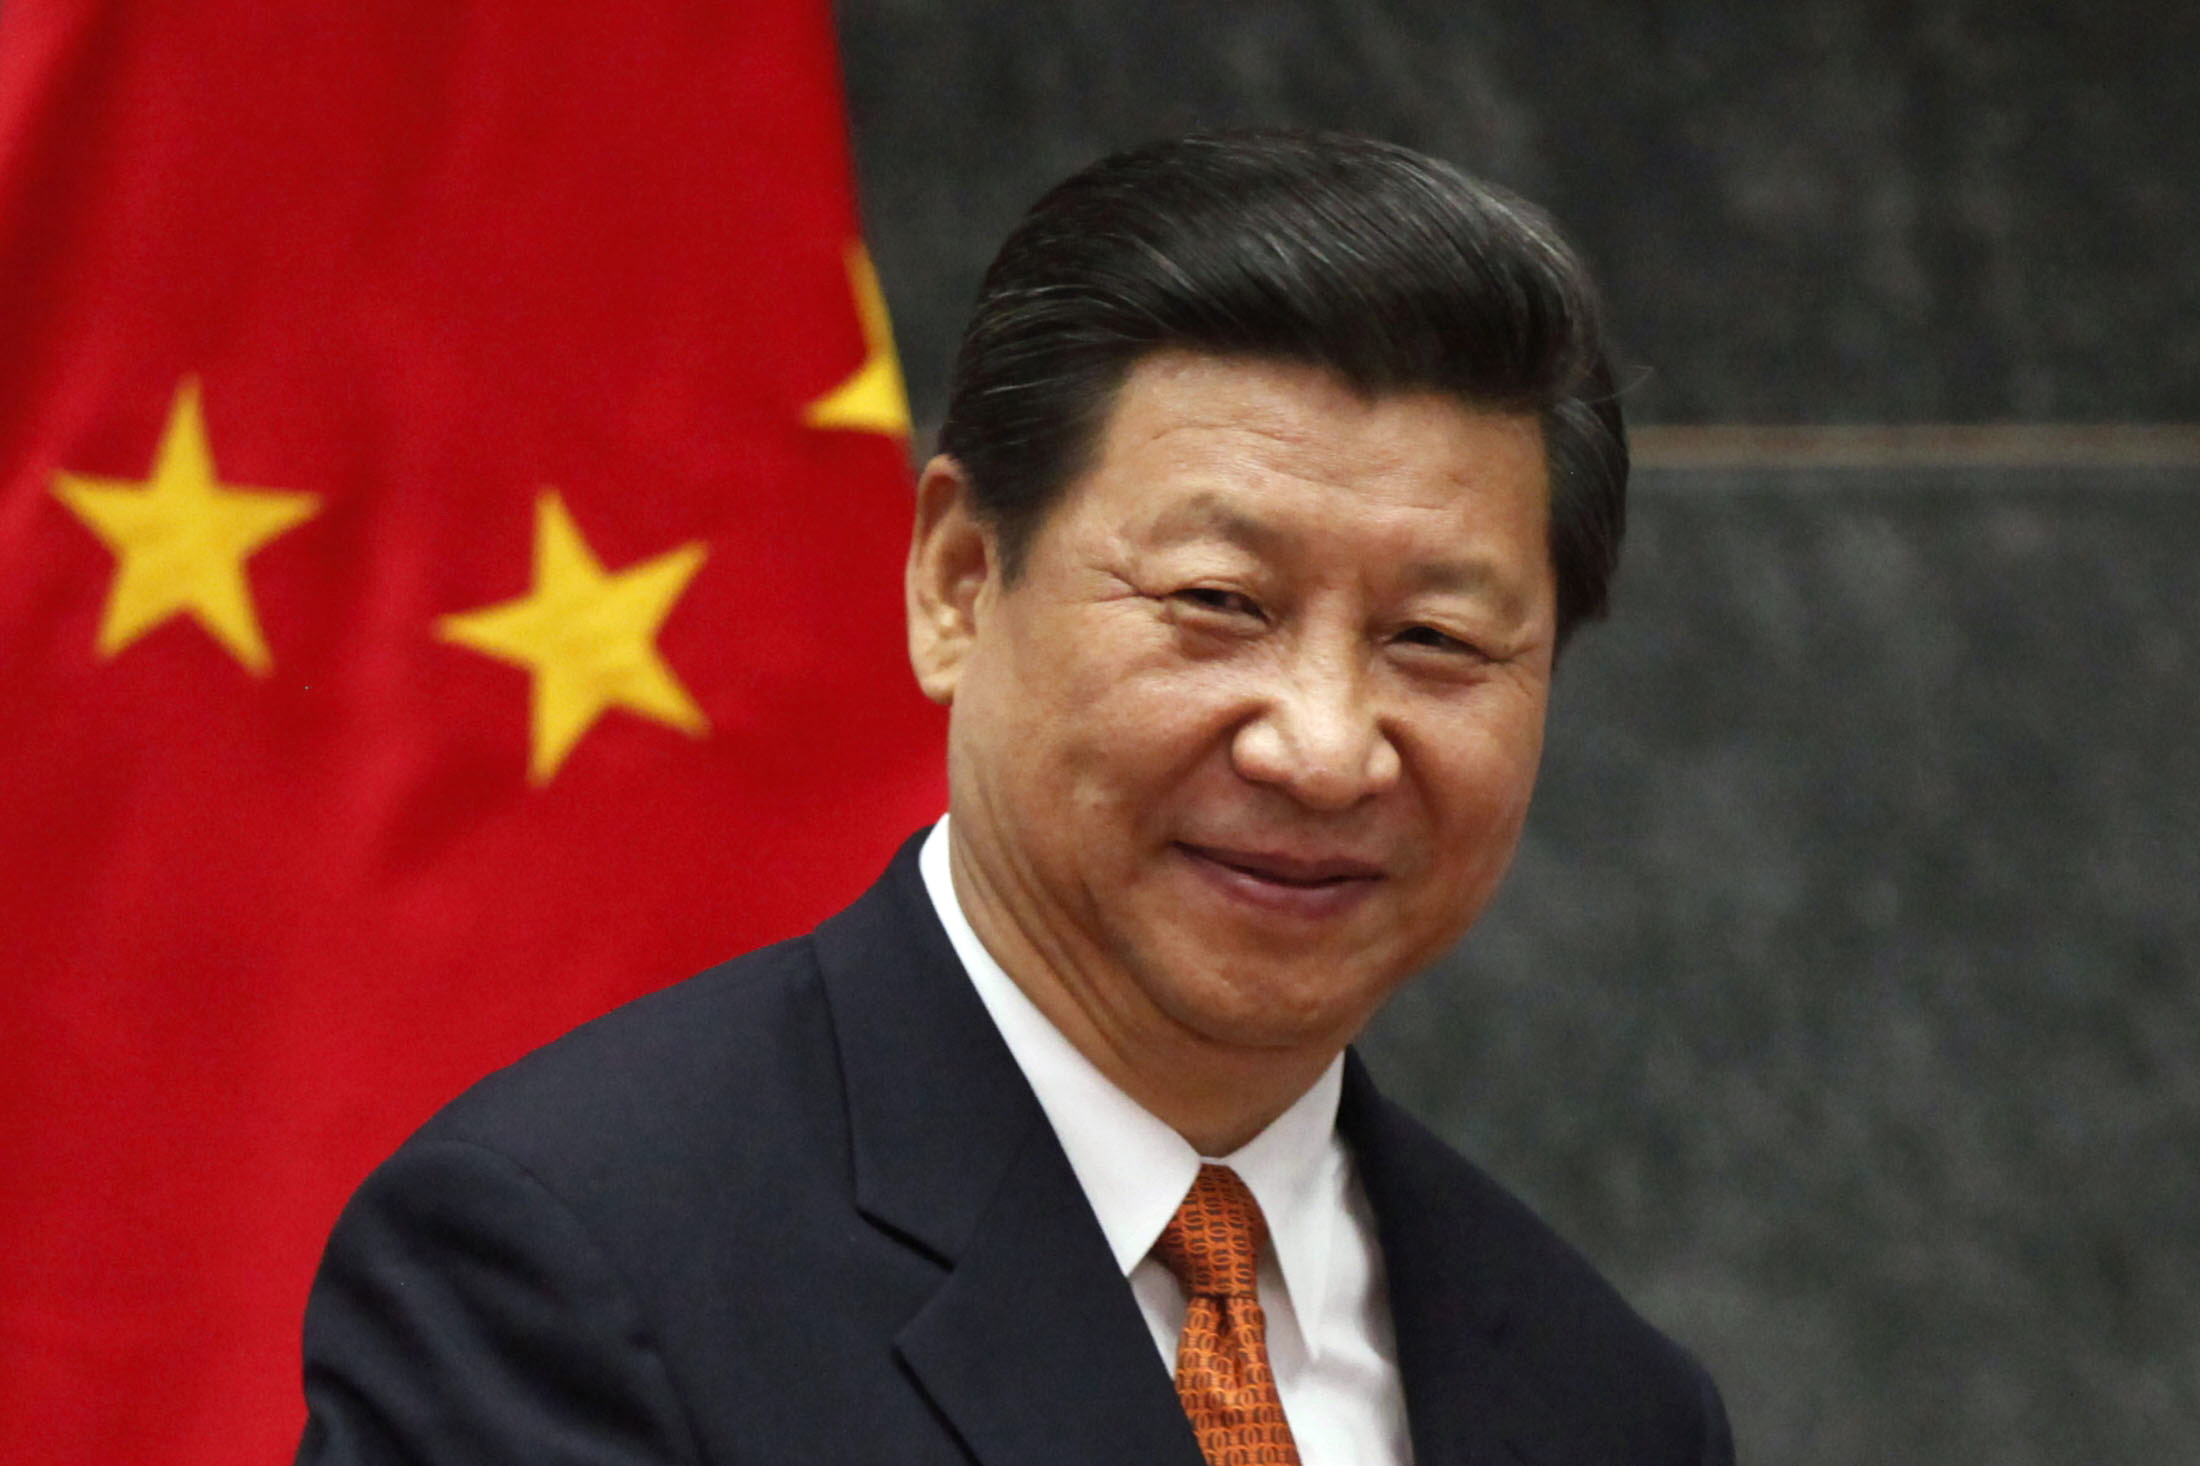 chinese president xi jinping photo reuters